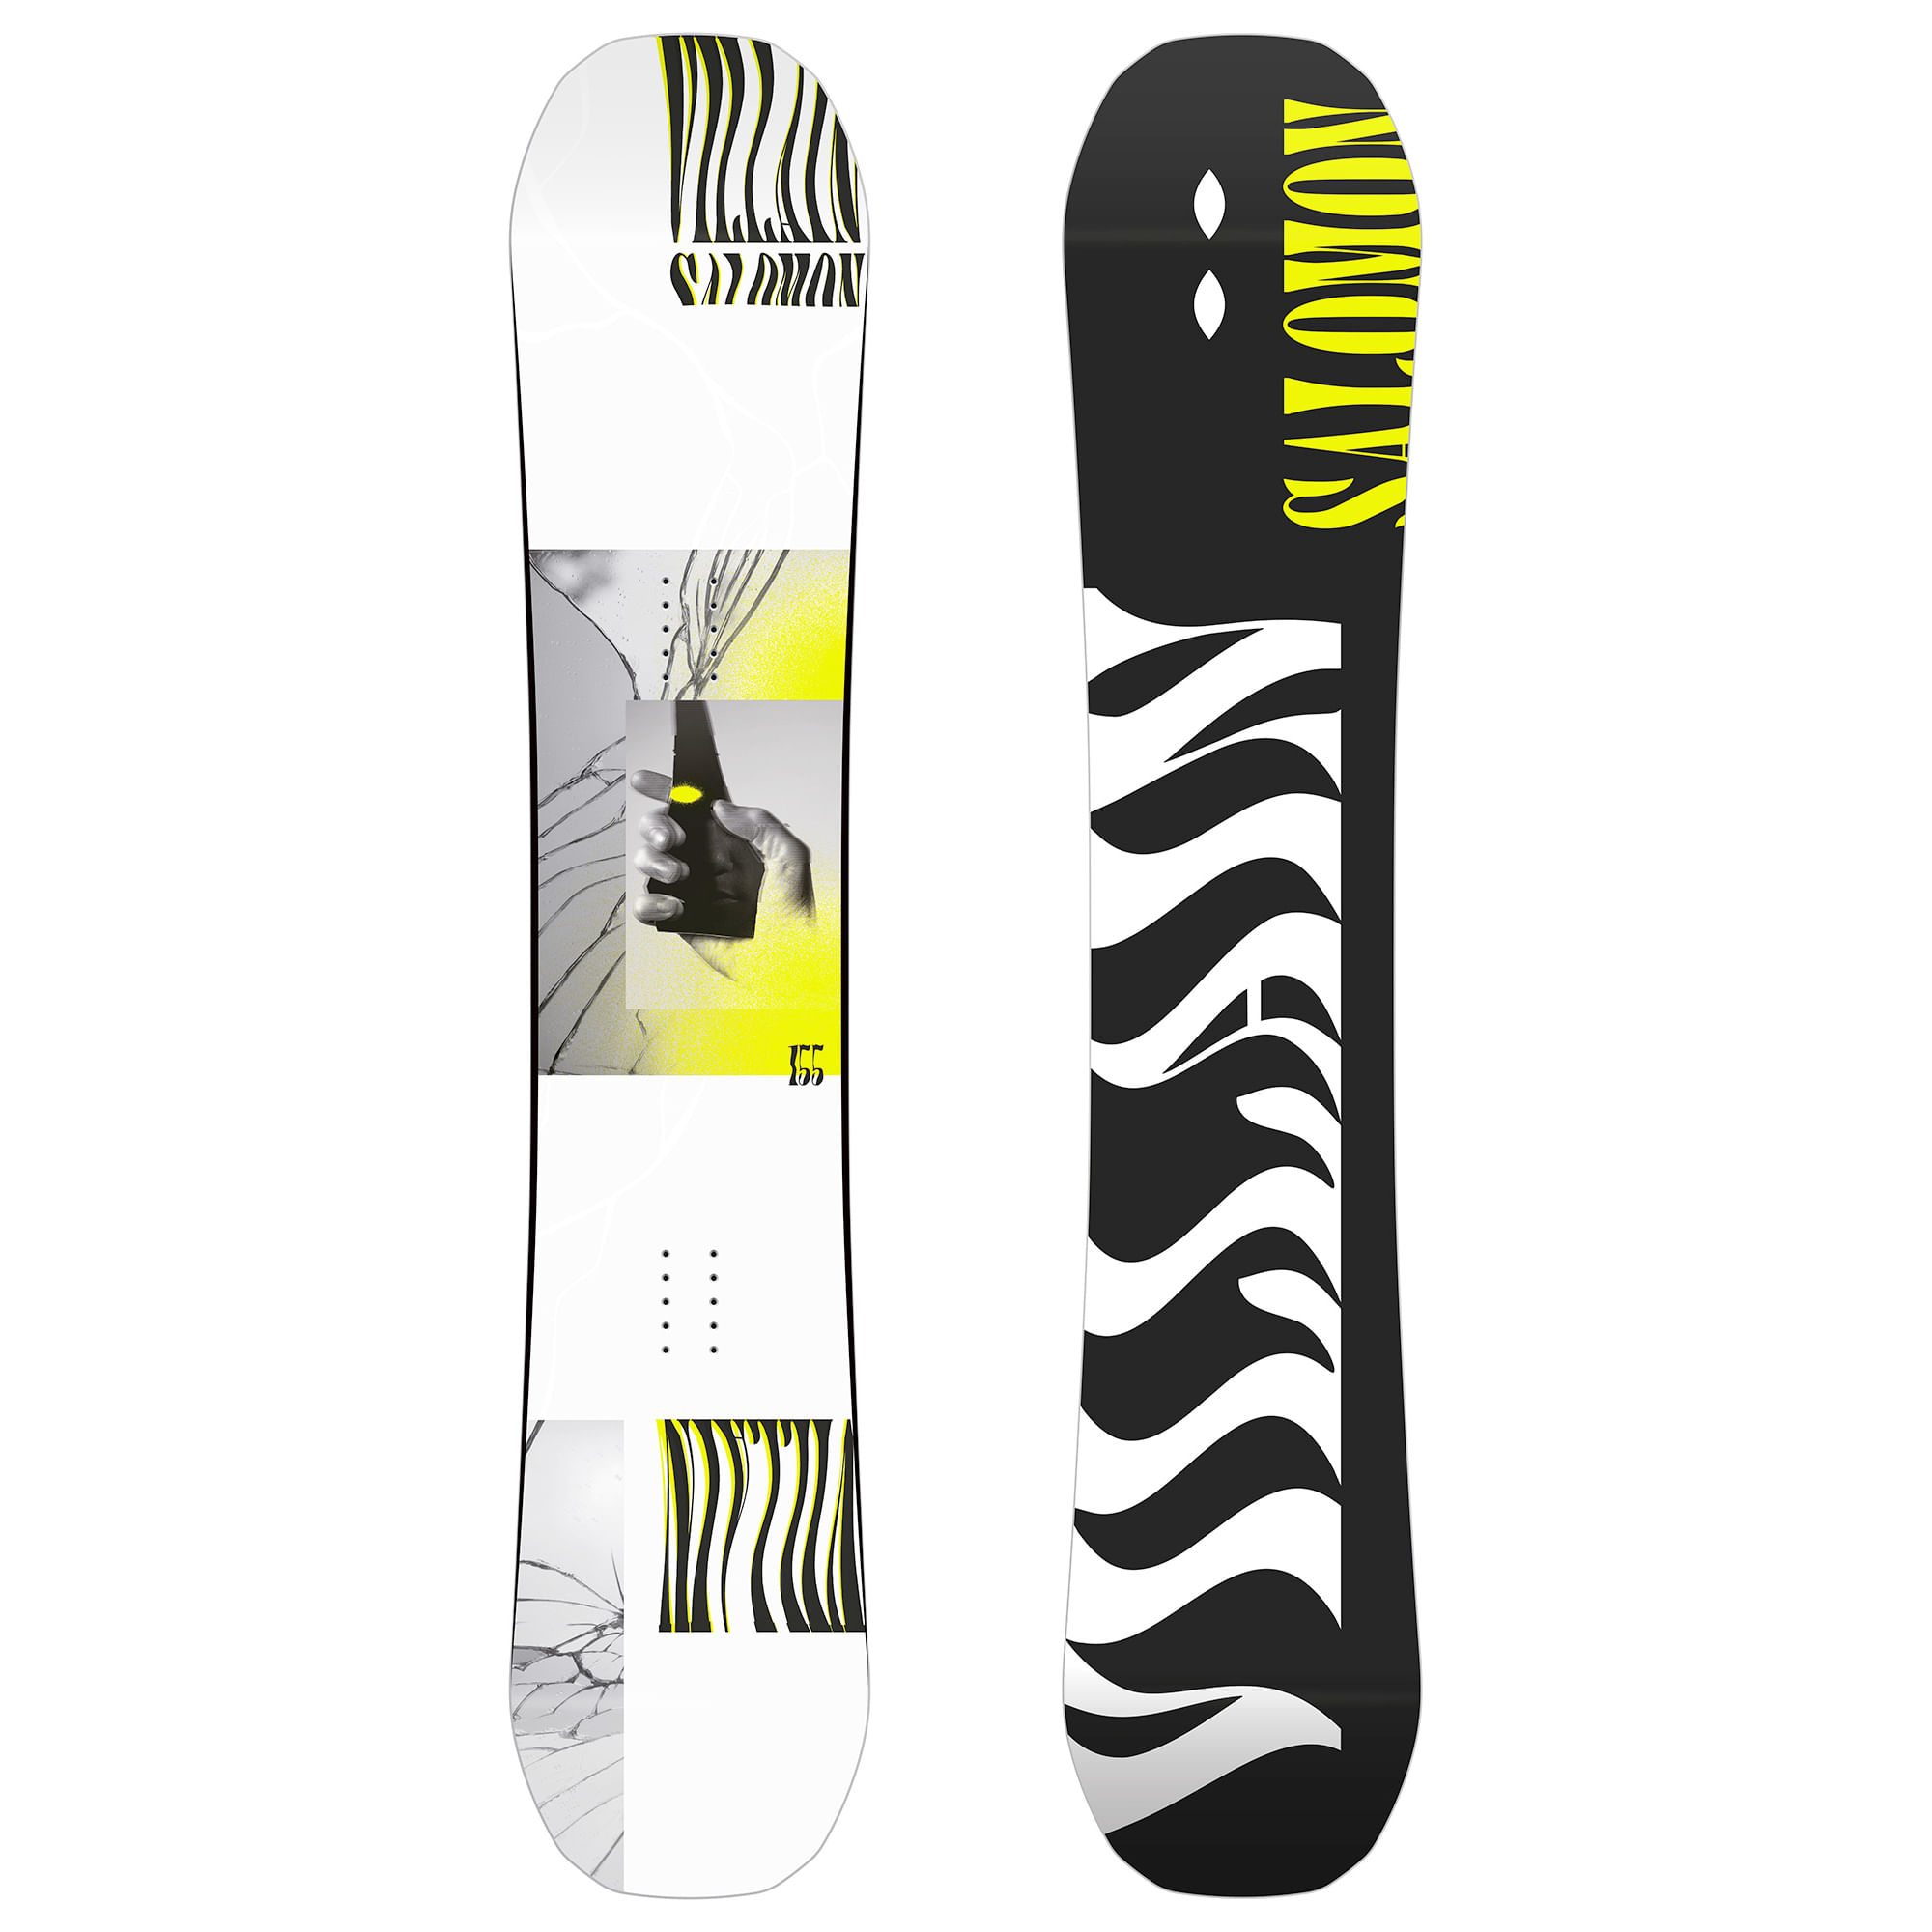 salomon 2020 snowboards